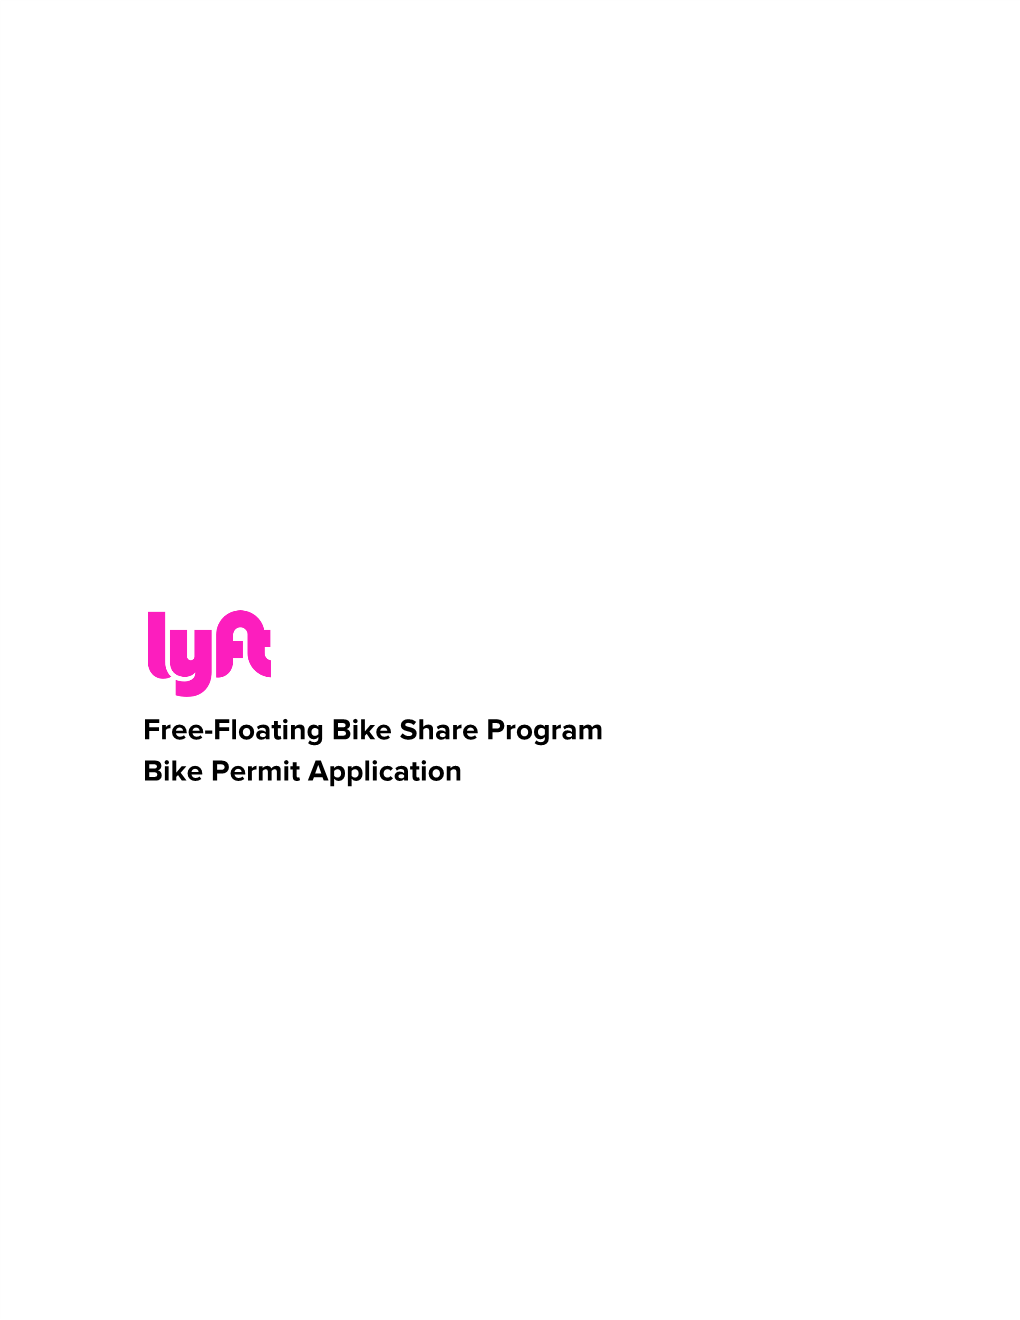 Free-Floating Bike Share Program Bike Permit Application